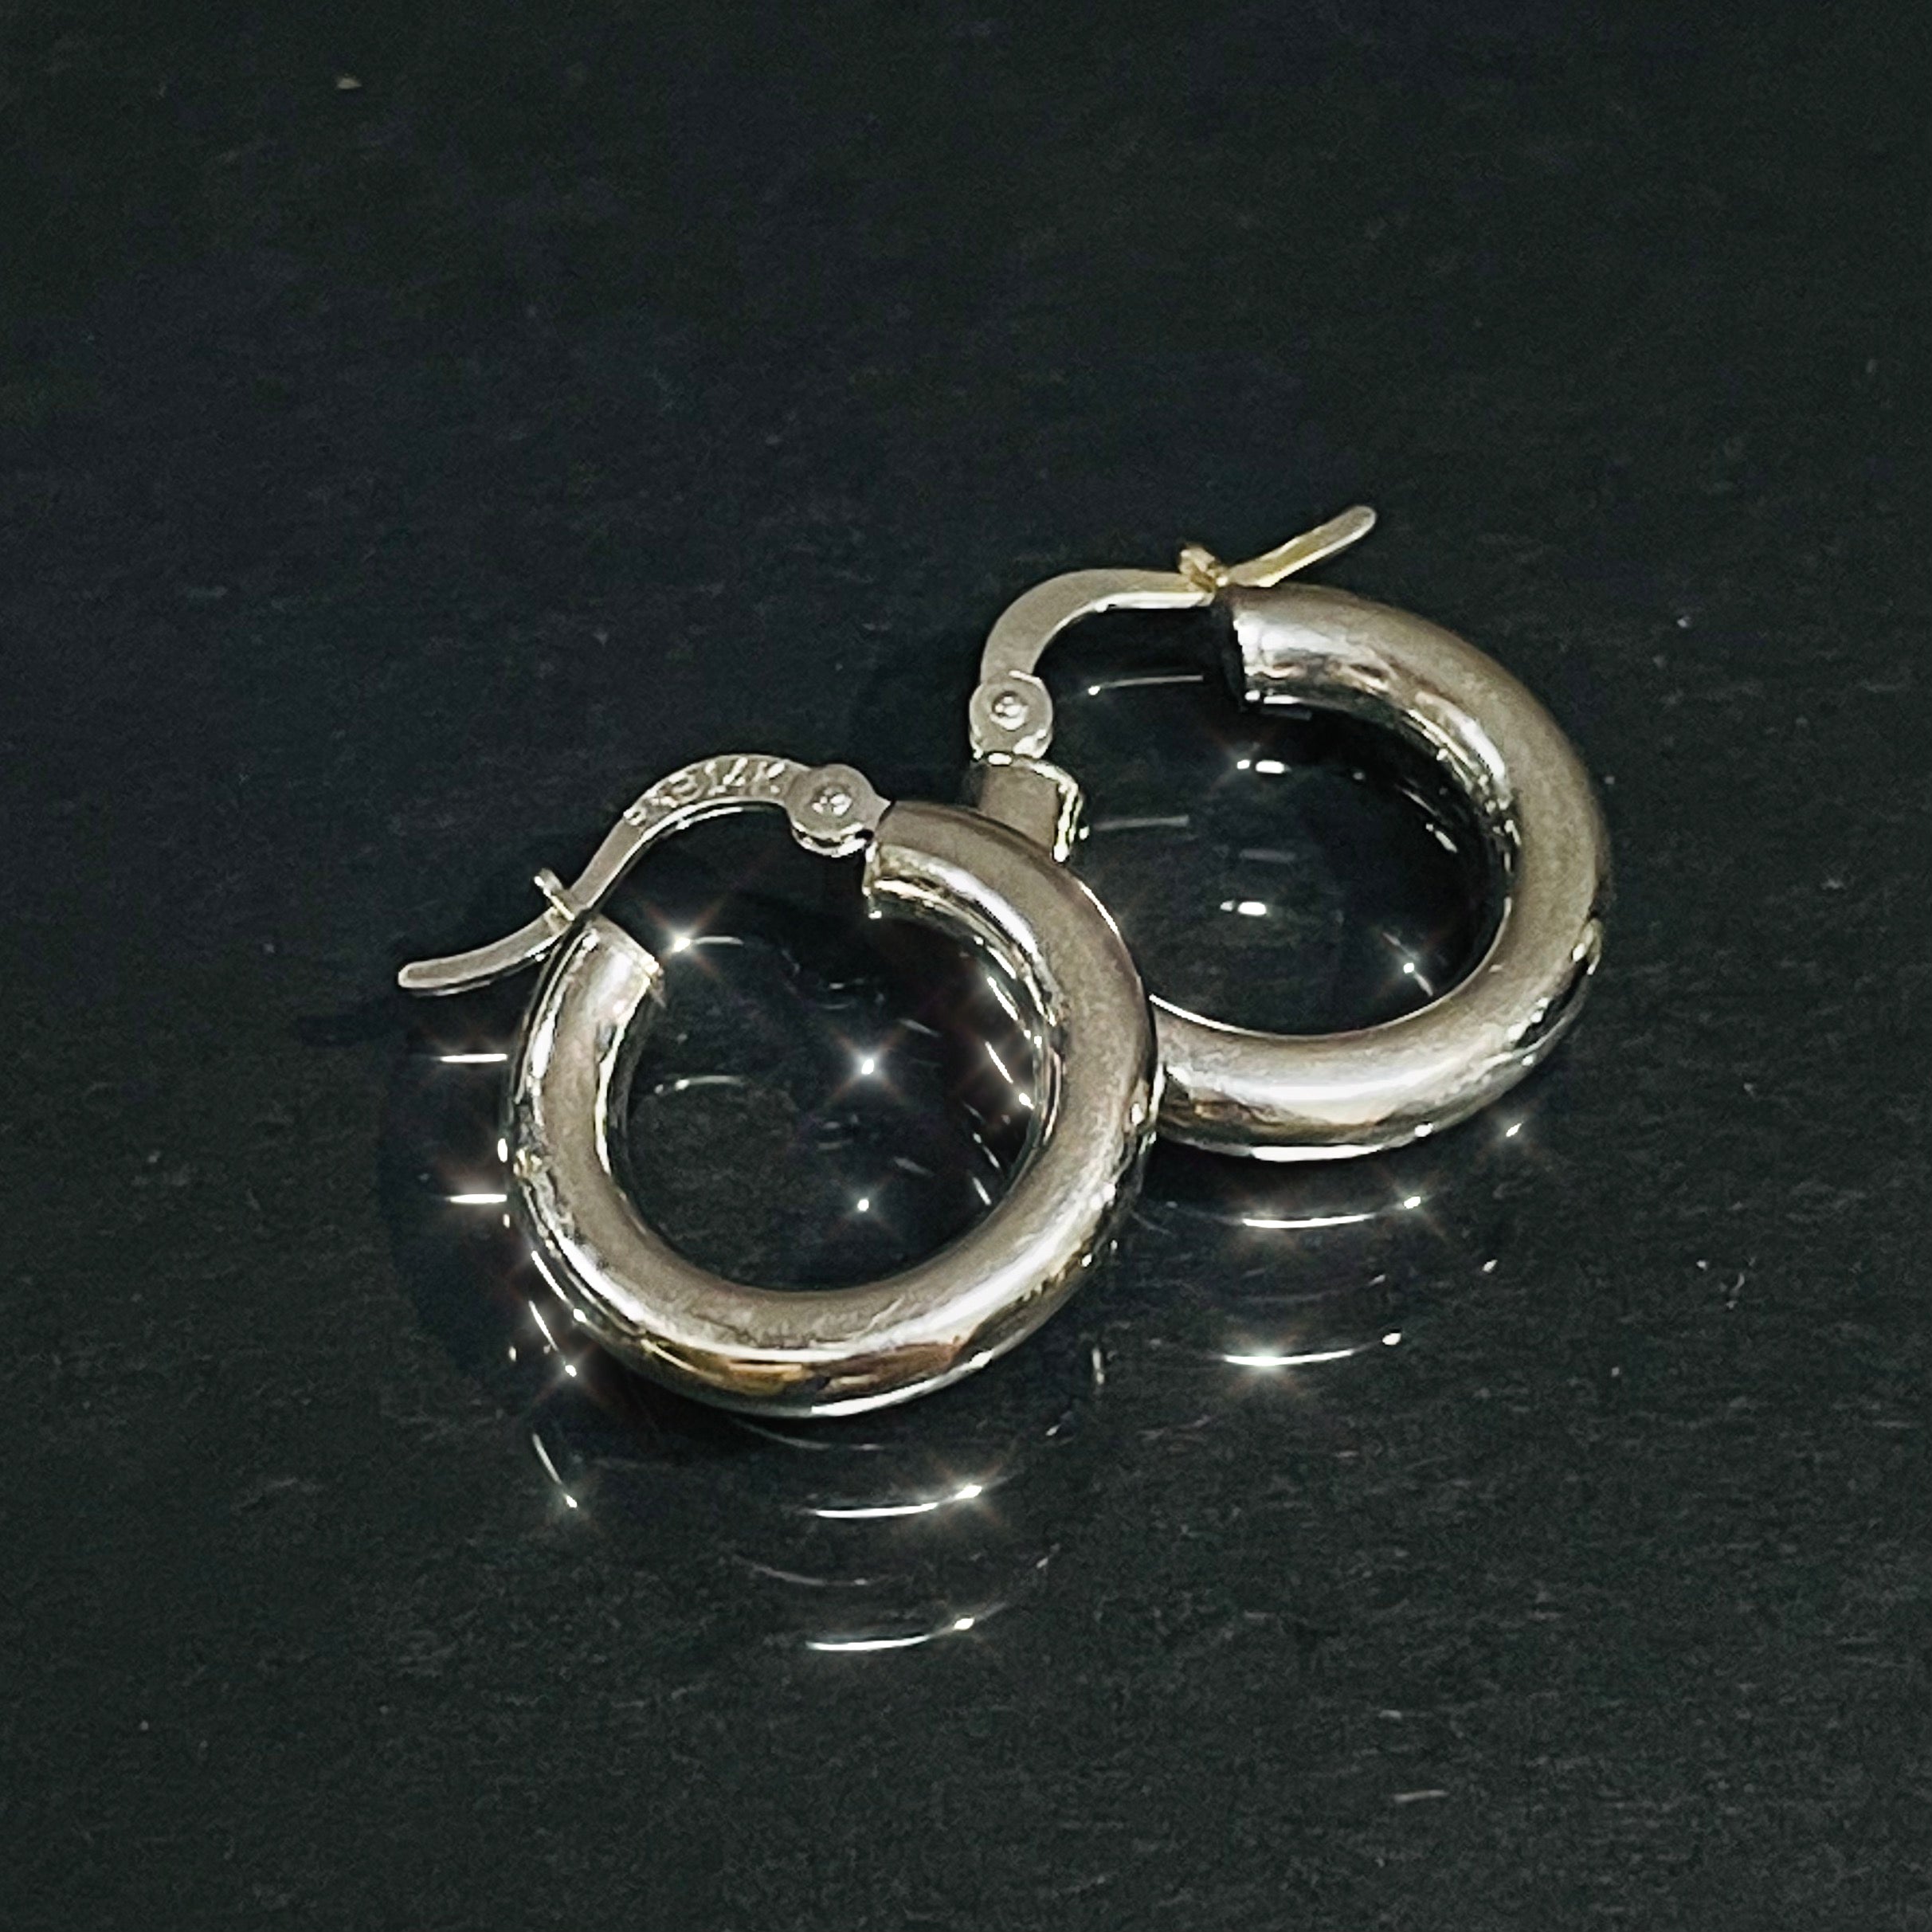 .65” 3mm 14K White Gold Sleek Hoop Earrings